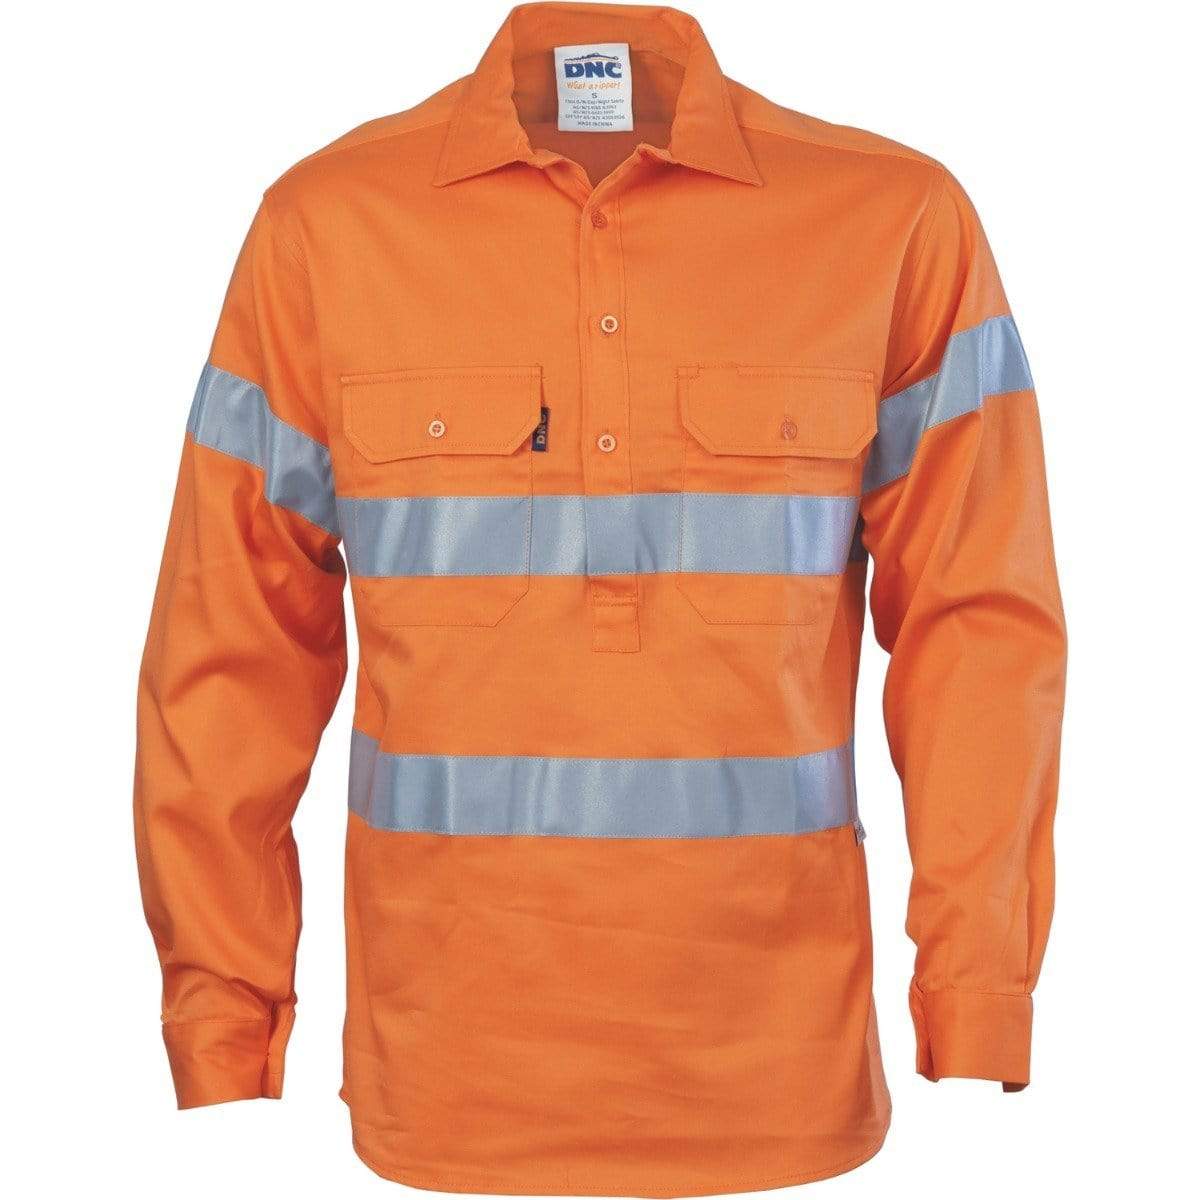 Dnc Workwear Hi-vis Cool-breeze Close Front Cotton Shirt With Generic Reflective Tape - 3945 Work Wear DNC Workwear Orange S 